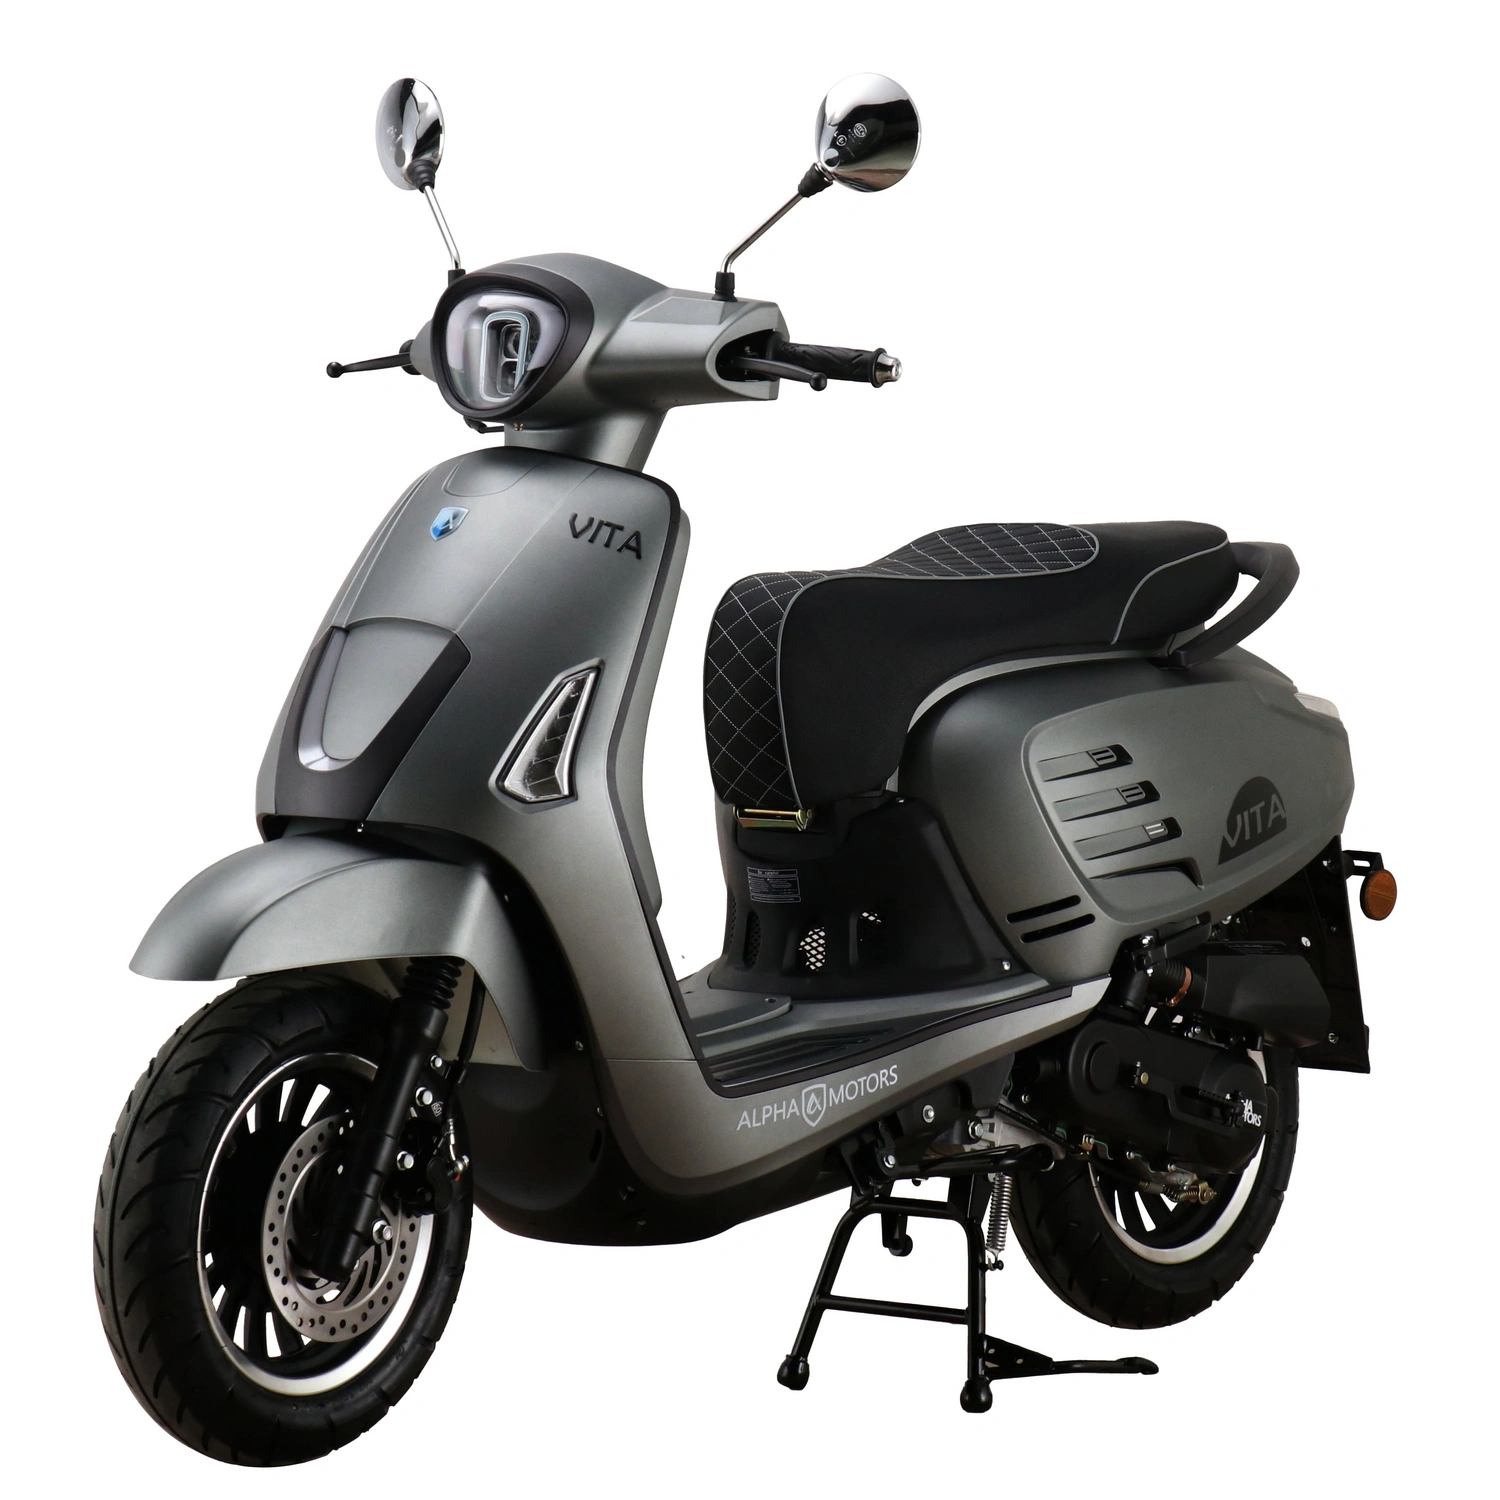 Euro »Vita«, MOTORS 85 km/h, 125 5 cm³, ALPHA Motorroller